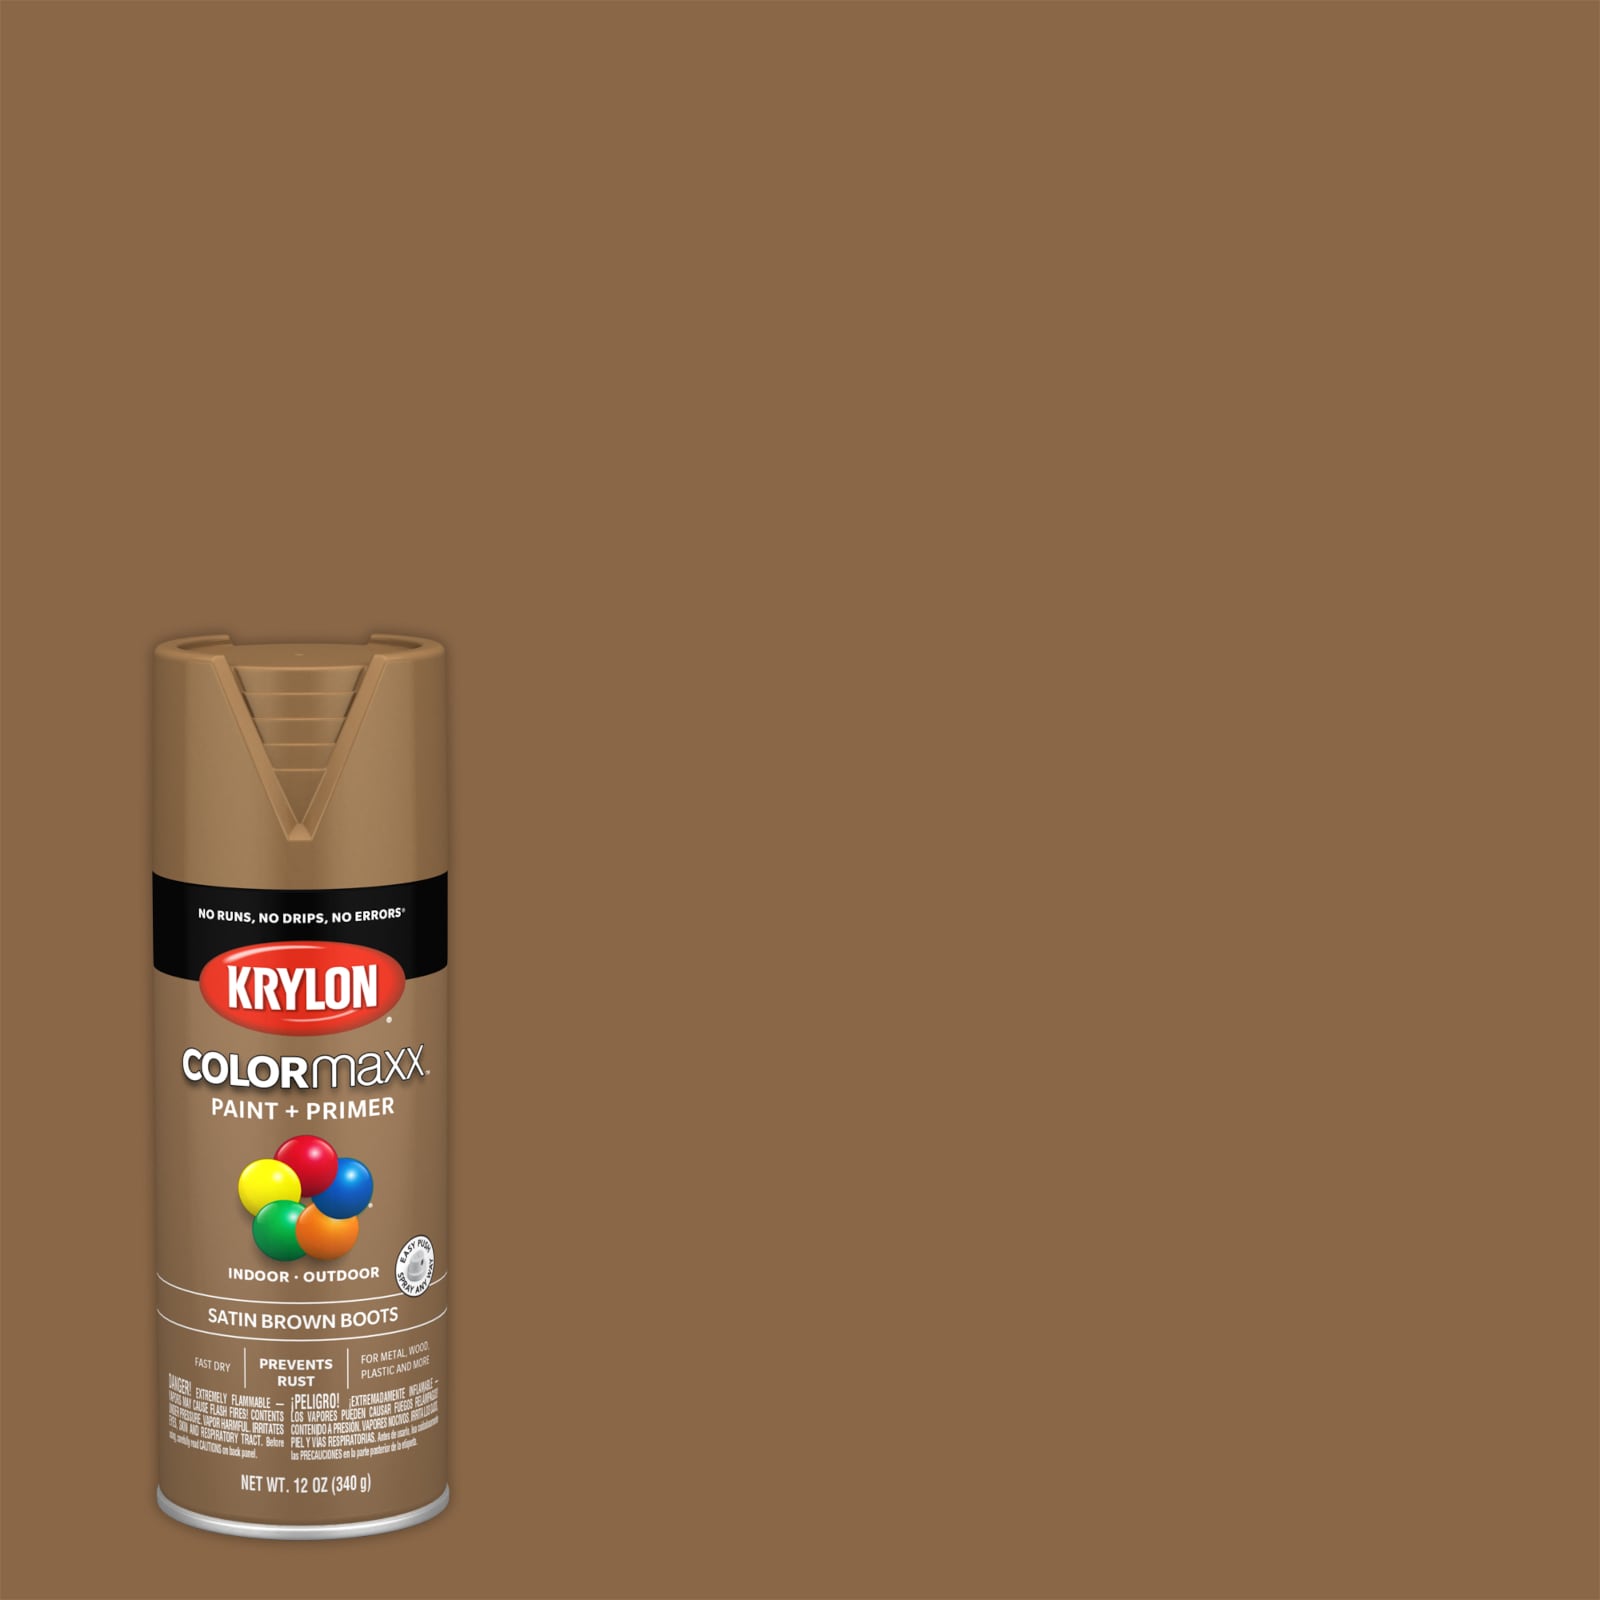 Dark Brown Sealant - Aerosol -Instant Leather Colour Spray